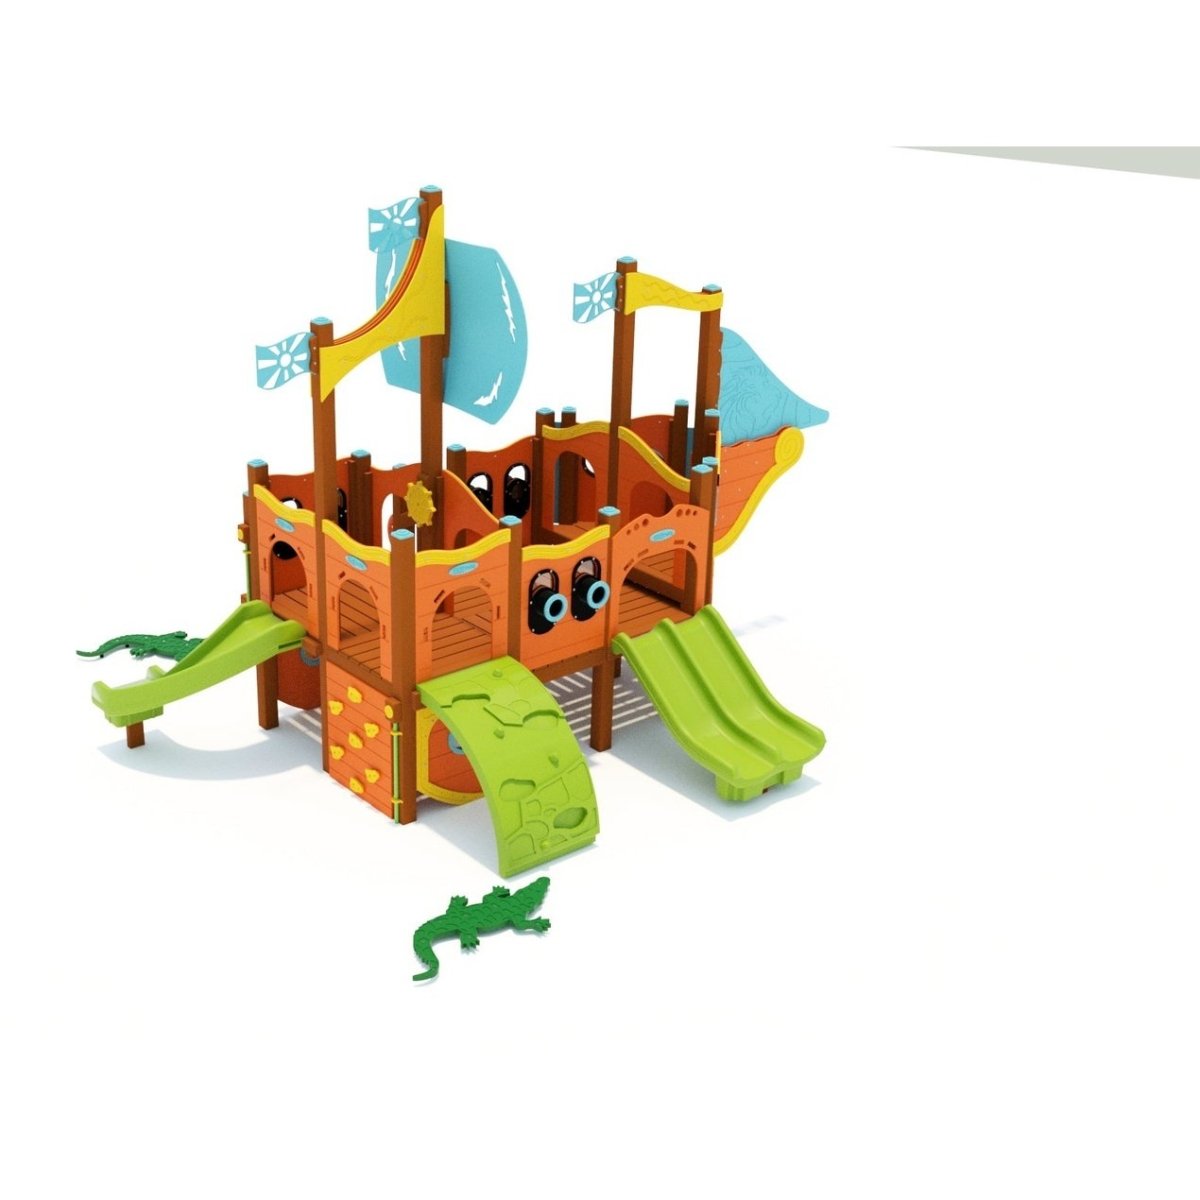 Sail Away Playset - Preschool Playgrounds - Playtopia, Inc.